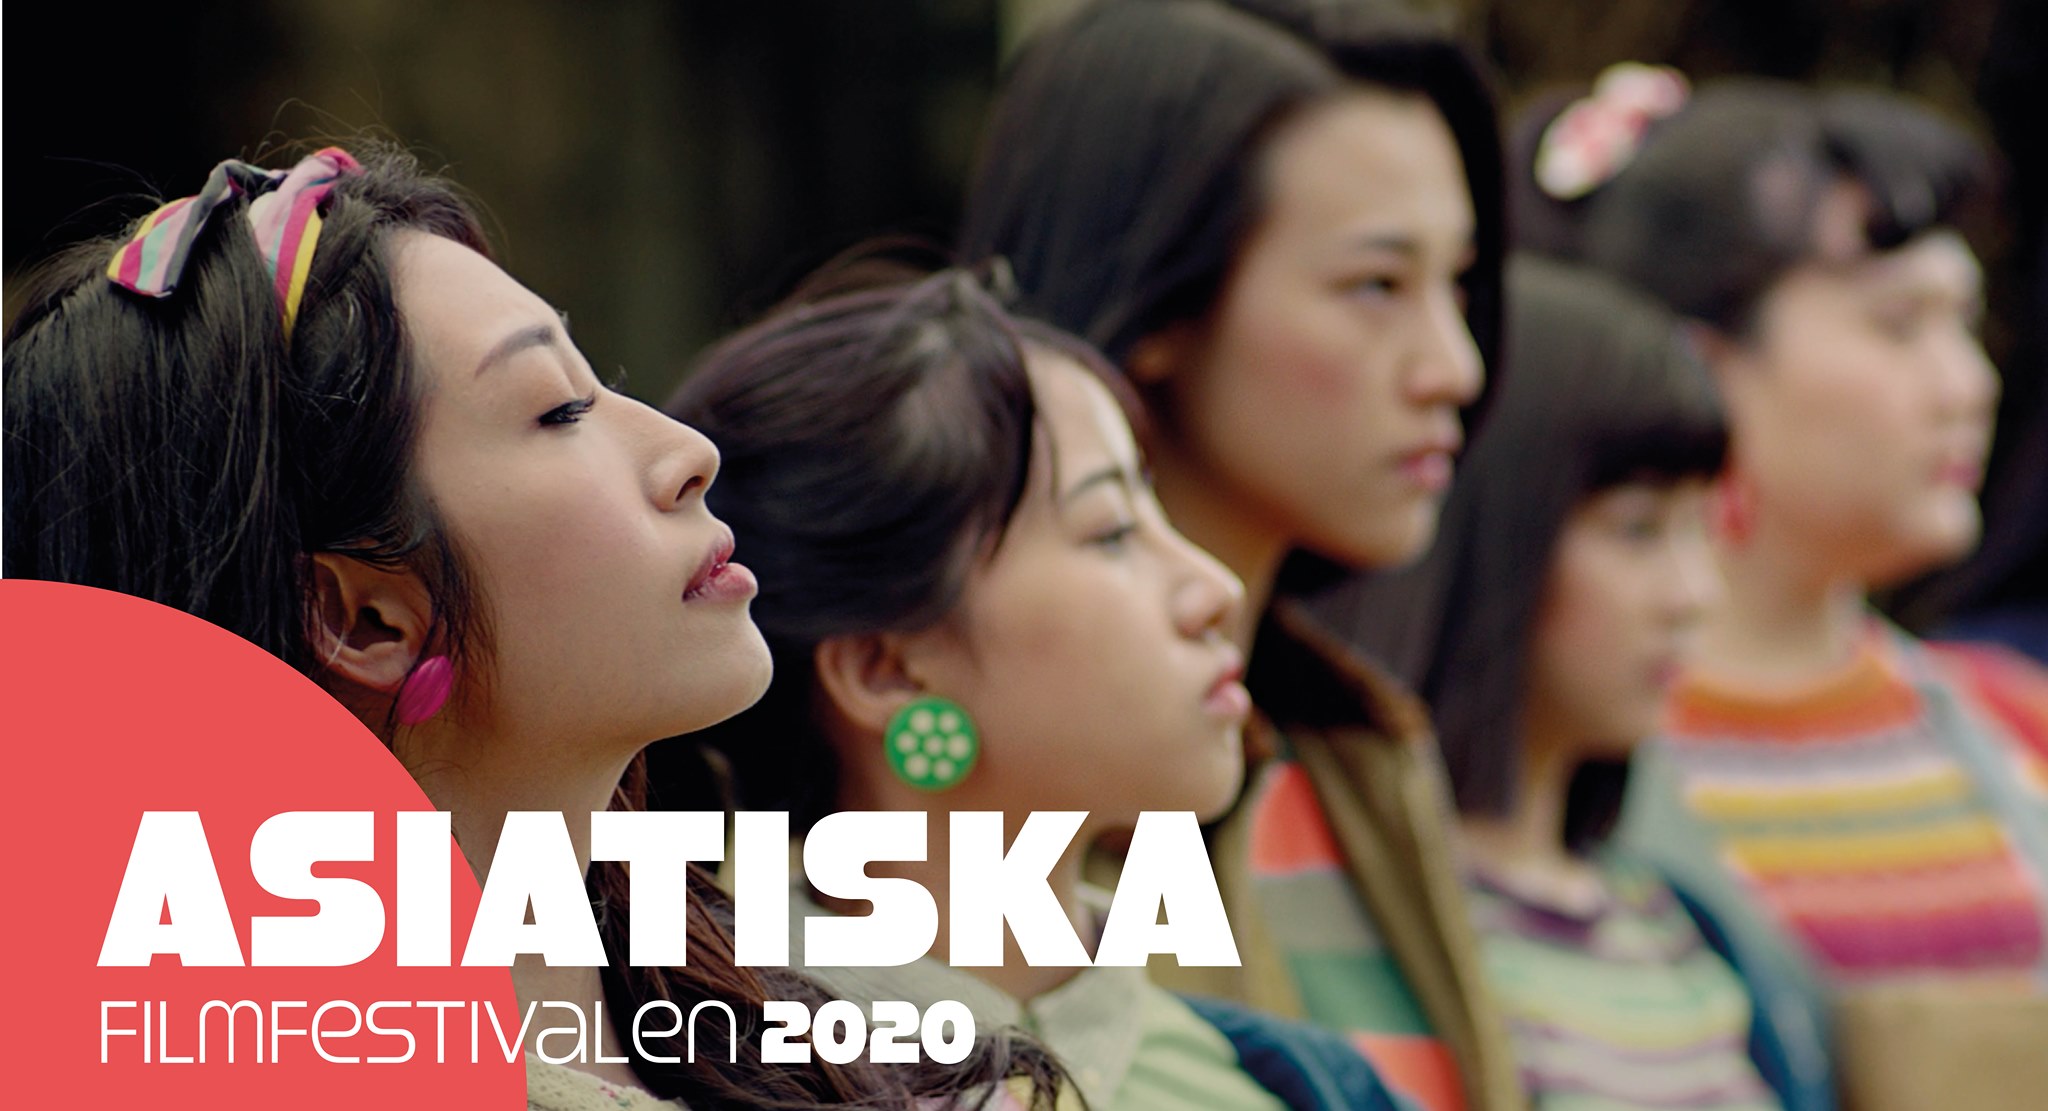 Asiatiska FilmFestivalen 2020 asian film festival